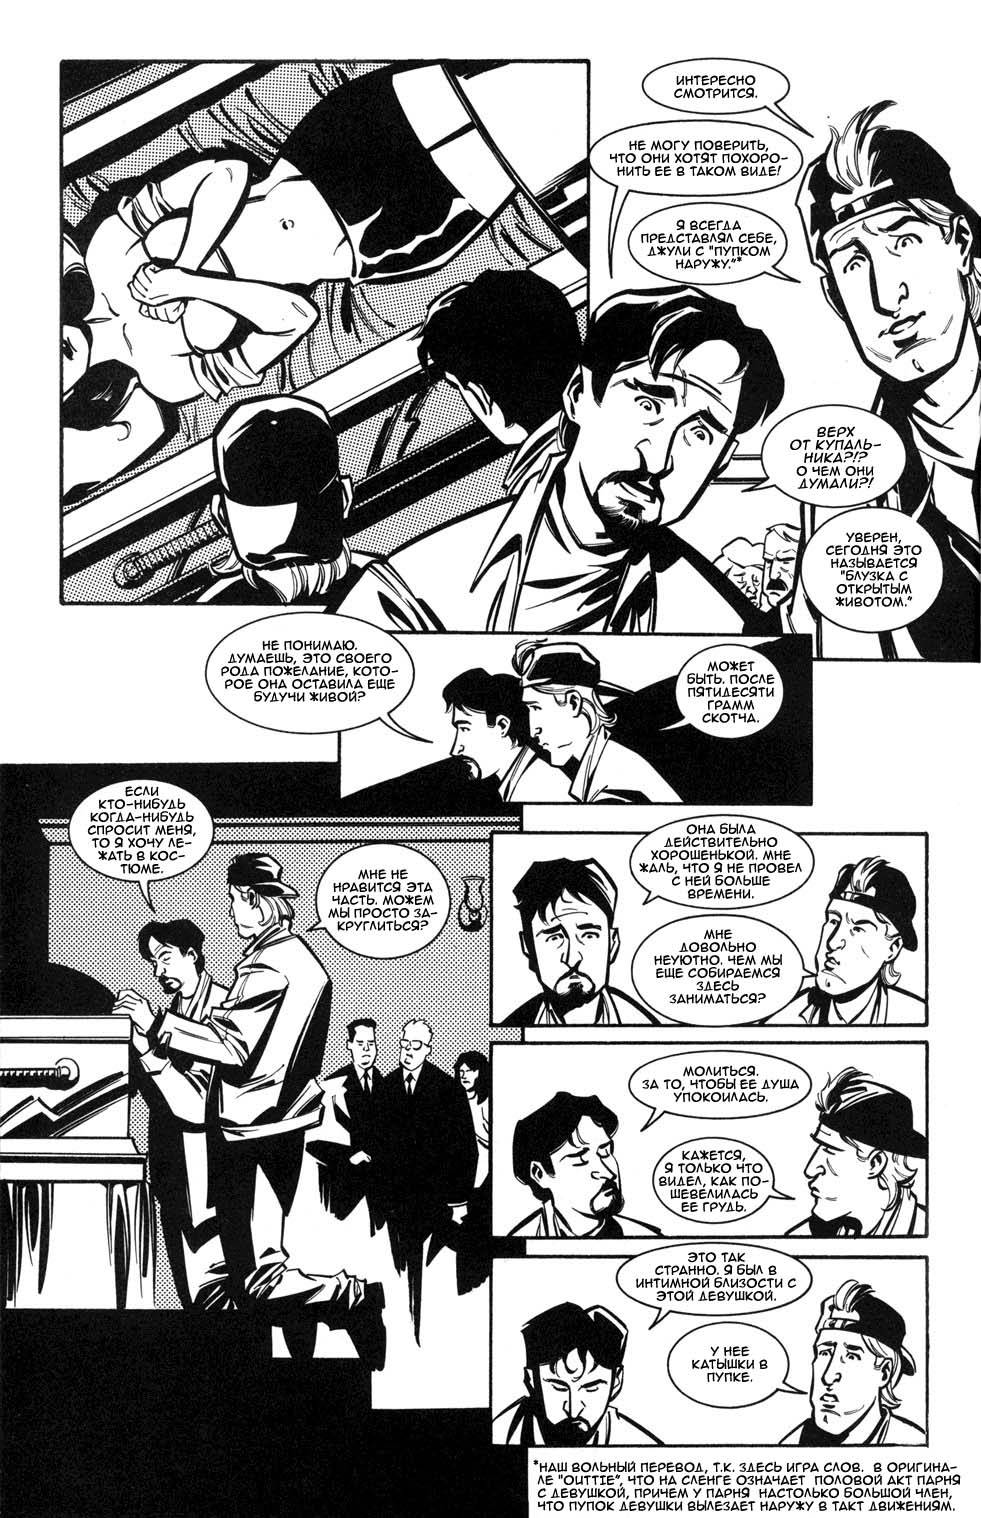 Клерки - Пропущенная Сцена (Clerks: The Lost Scene) - страница 16 - читать комикс онлайн бесплатно | UniComics